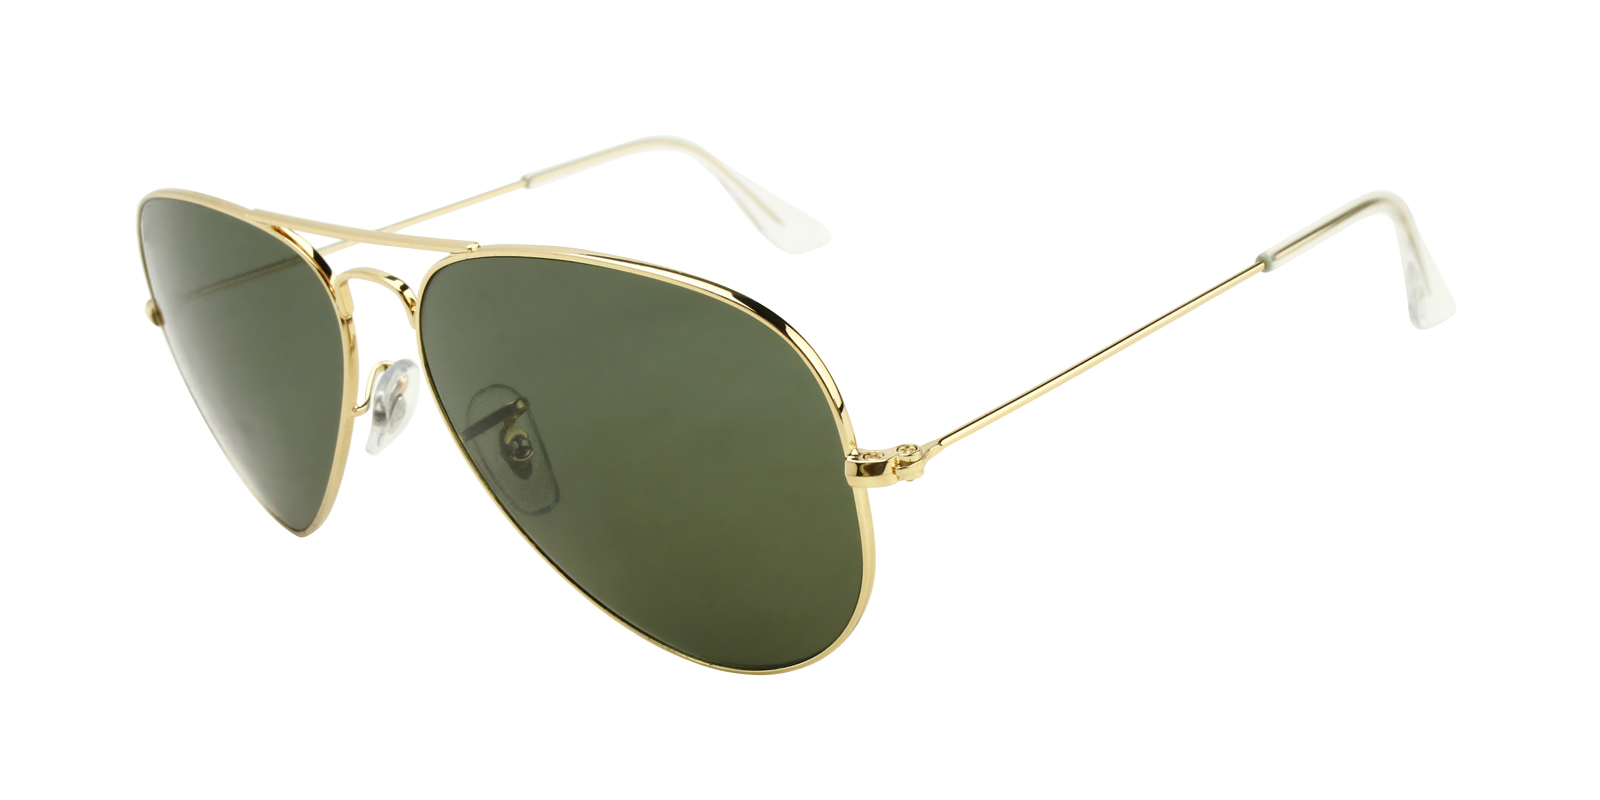 Top 8 Ray-Ban Sunglasses Deals This Holiday Season - Sunglasses and Style  Blog 